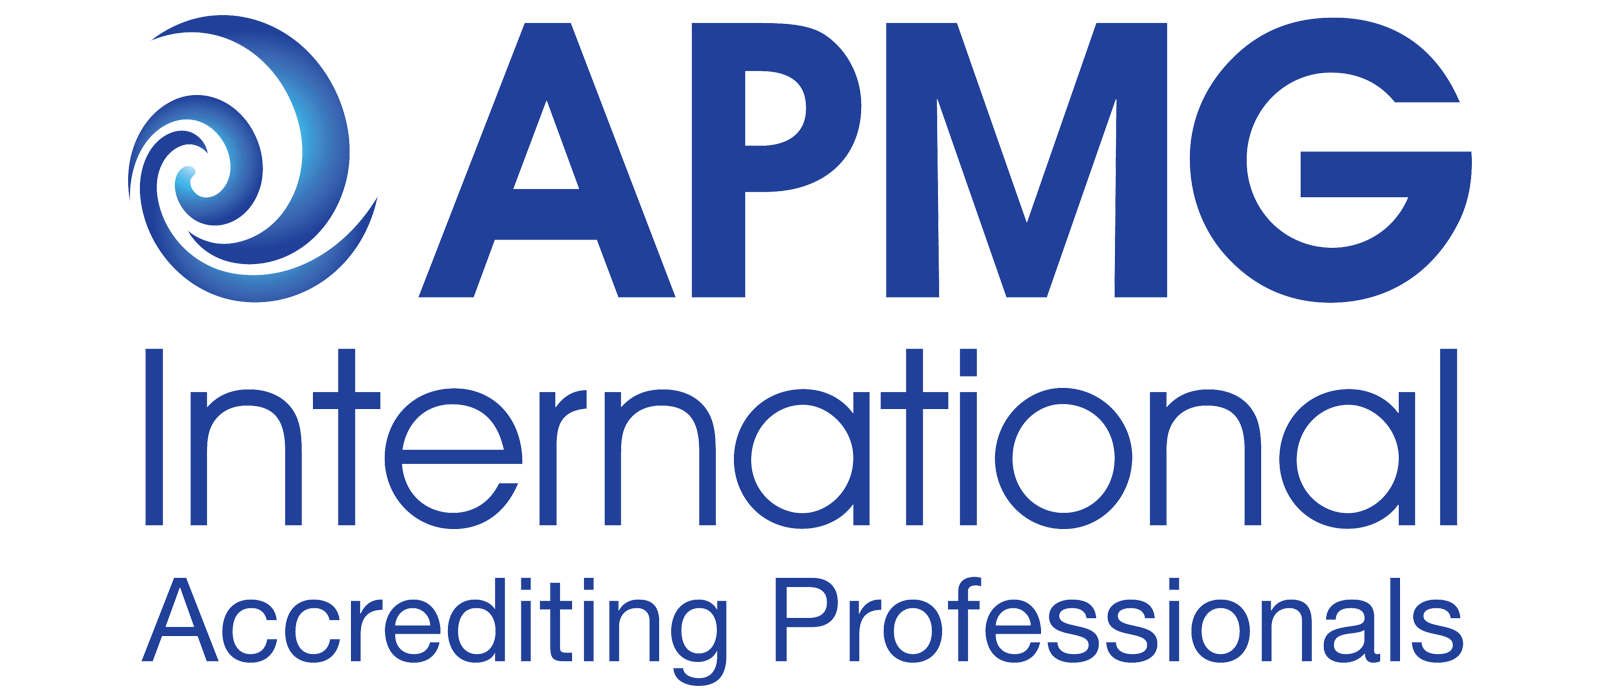 APMG (APM Group Ltd) InternationalTM